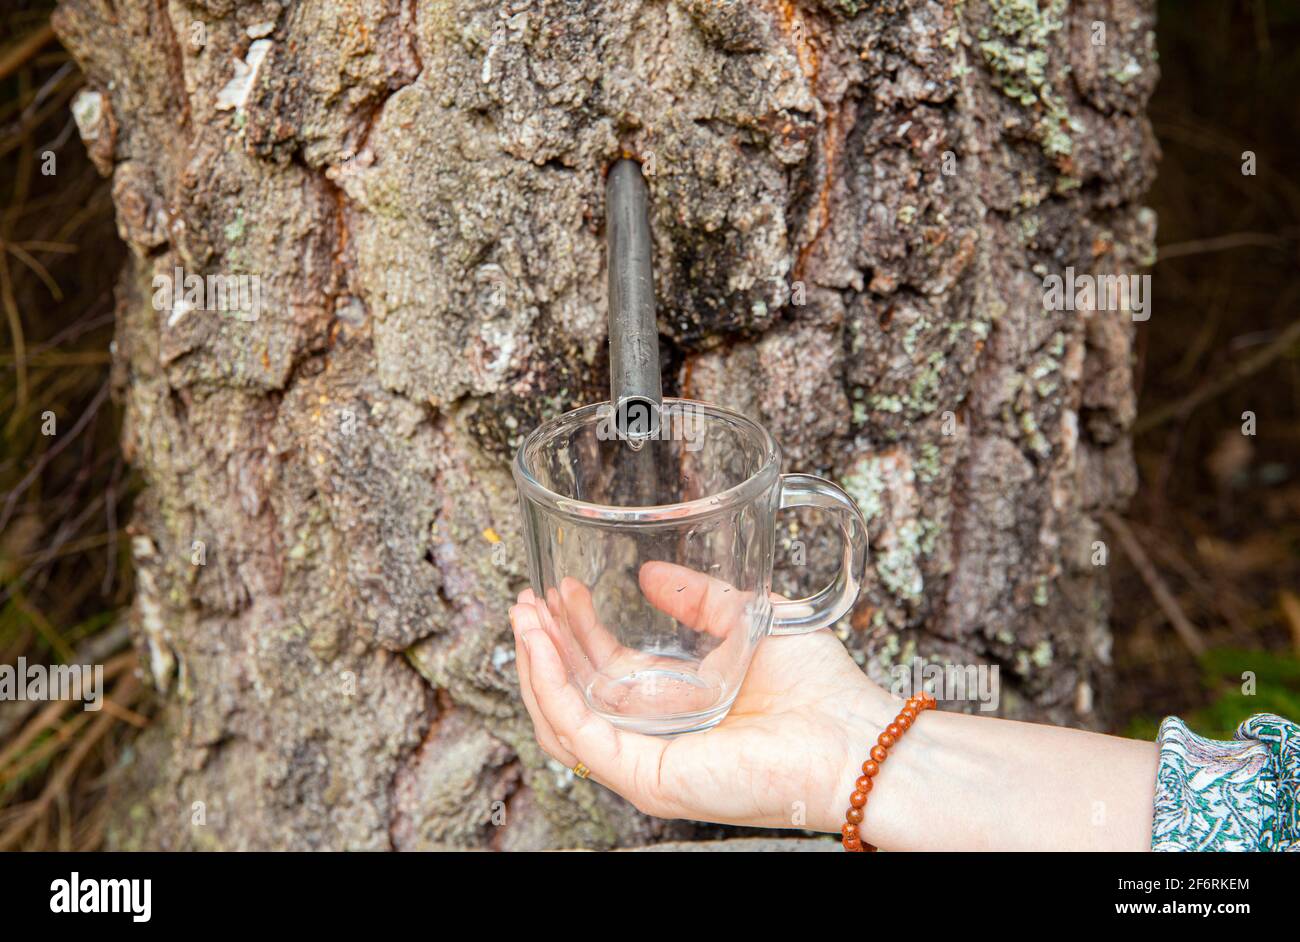 https://c8.alamy.com/comp/2F6RKEM/person-hand-gathering-birch-sap-dripping-from-birch-tree-in-spring-healthy-full-of-vitamin-drink-2F6RKEM.jpg